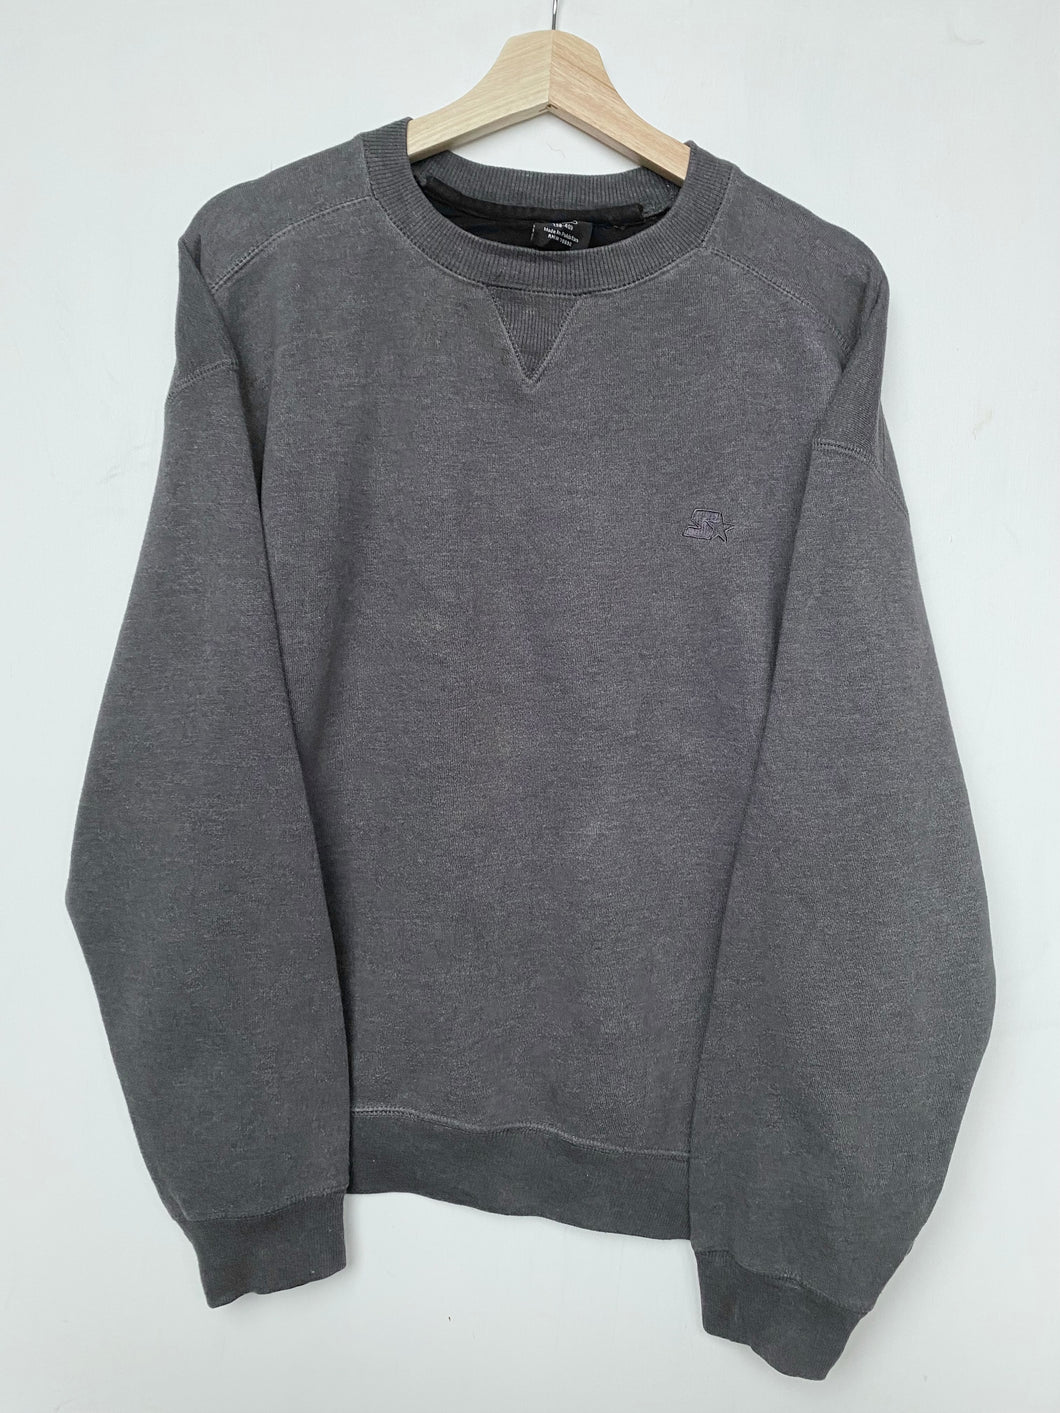 Starter sweatshirt (M)